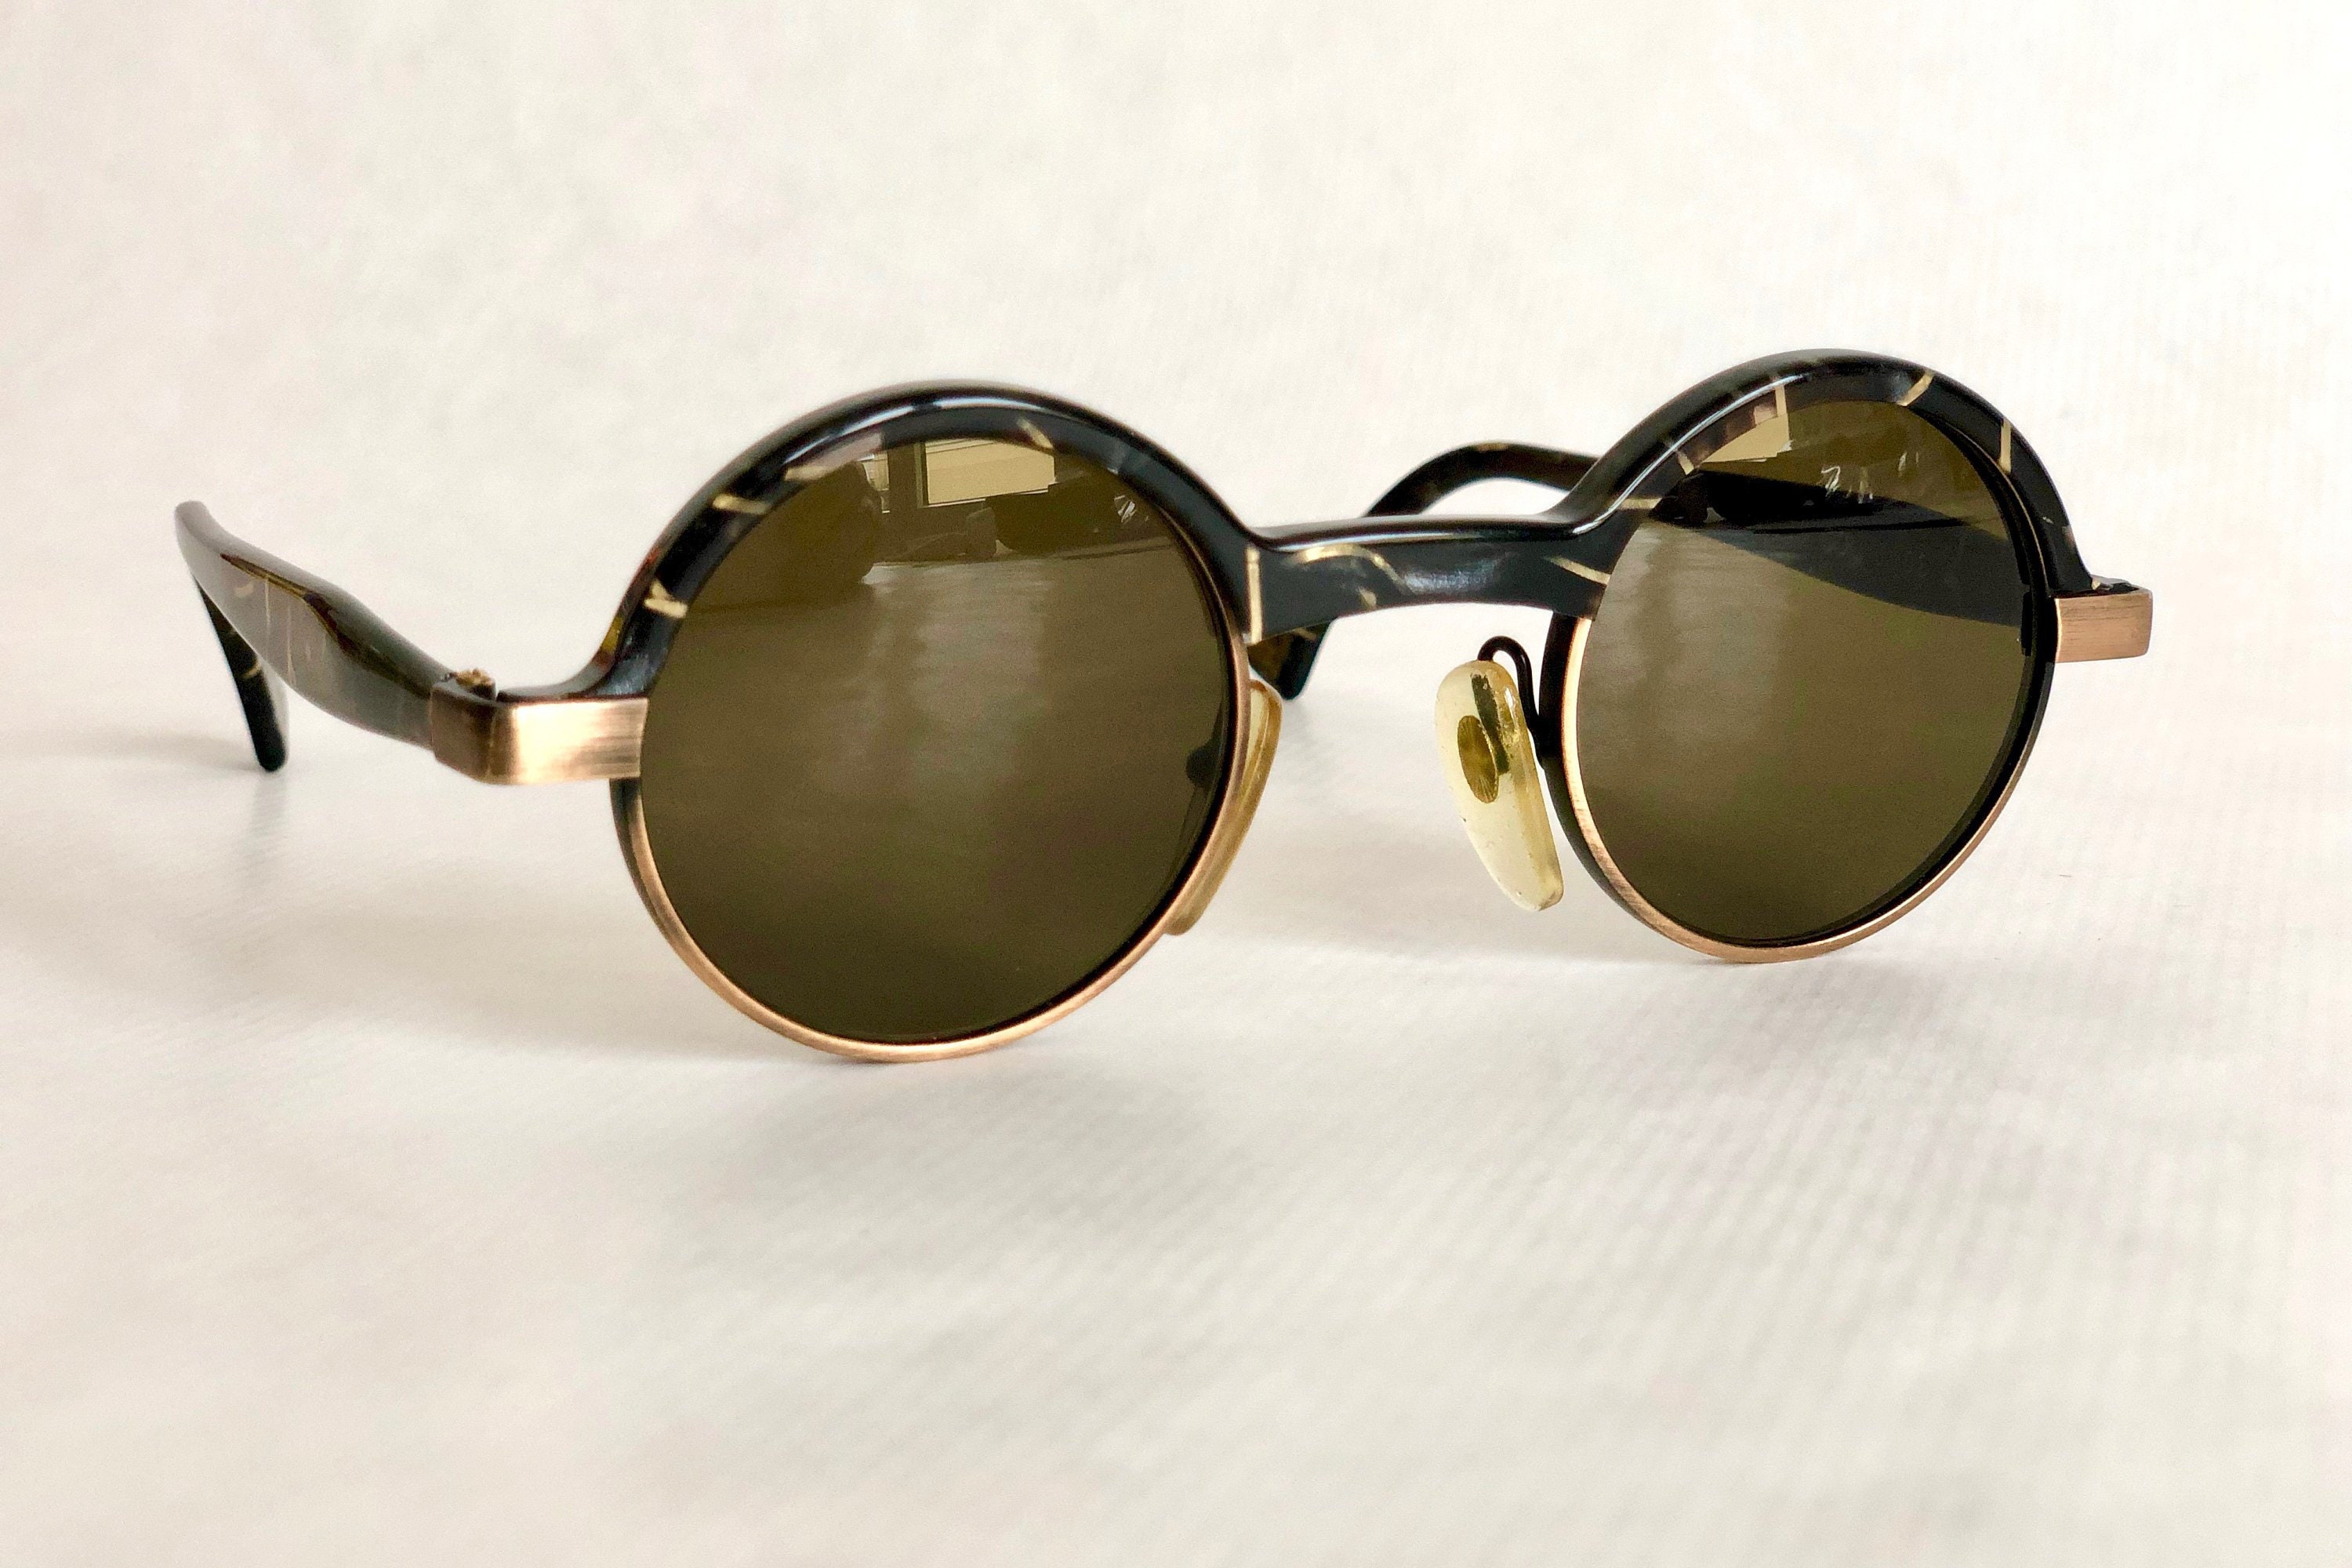 Donna Karan by Alain Mikli D18 Vintage Sunglasses – Made in France ...